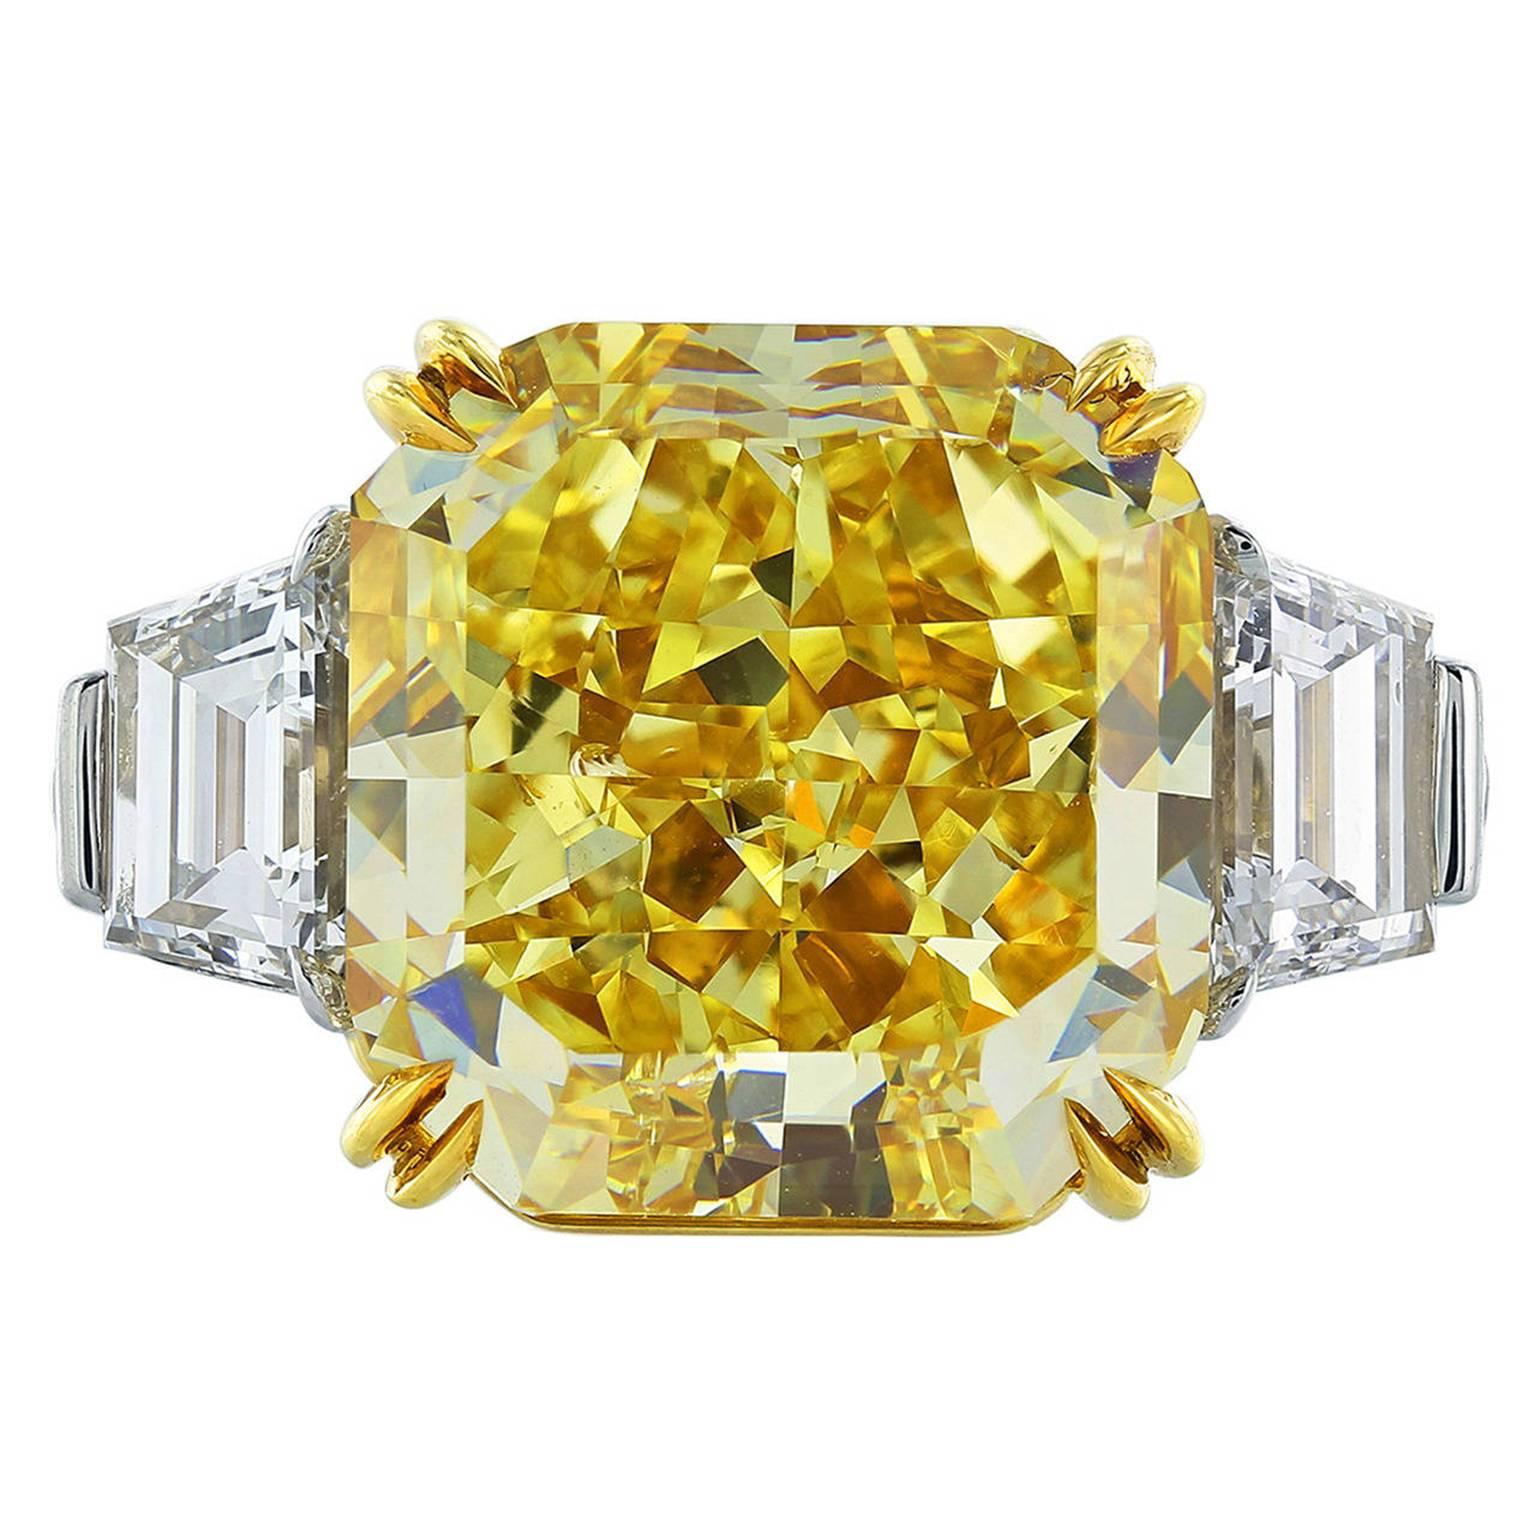 Magnificent 10.18 Carat Fancy Intense Yellow Internally Flawless Diamond Ring